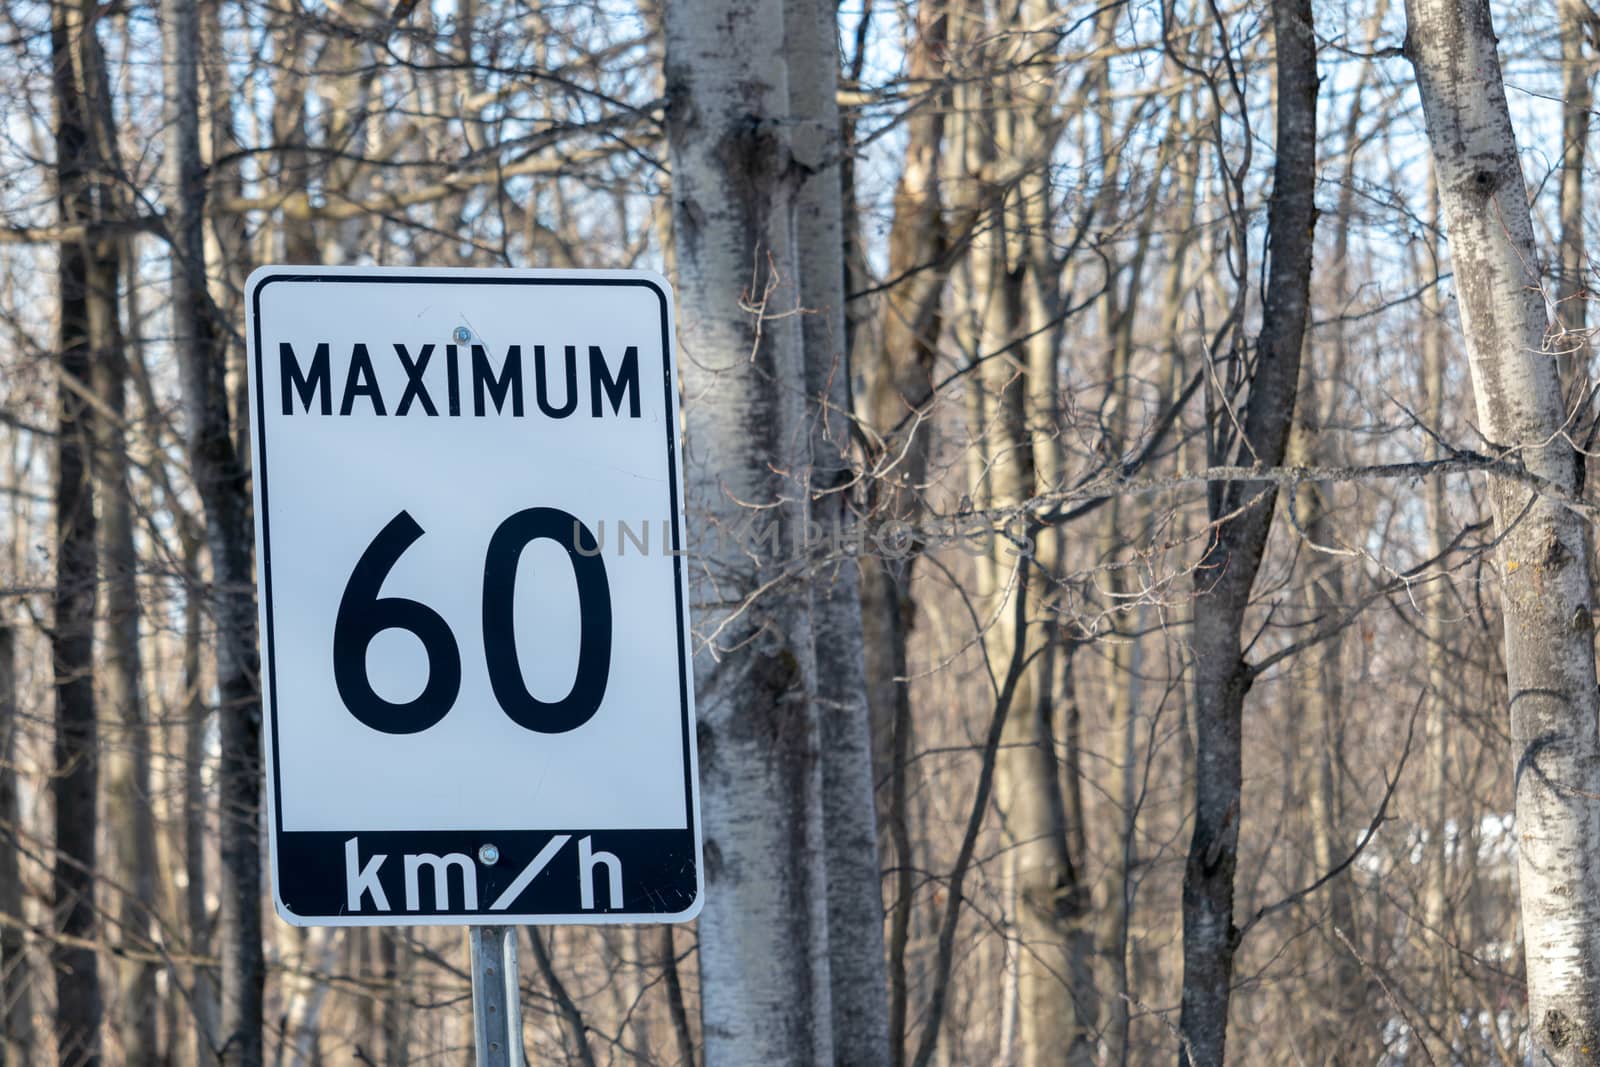 Speed limit sign: Maximum 60 km/h by colintemple